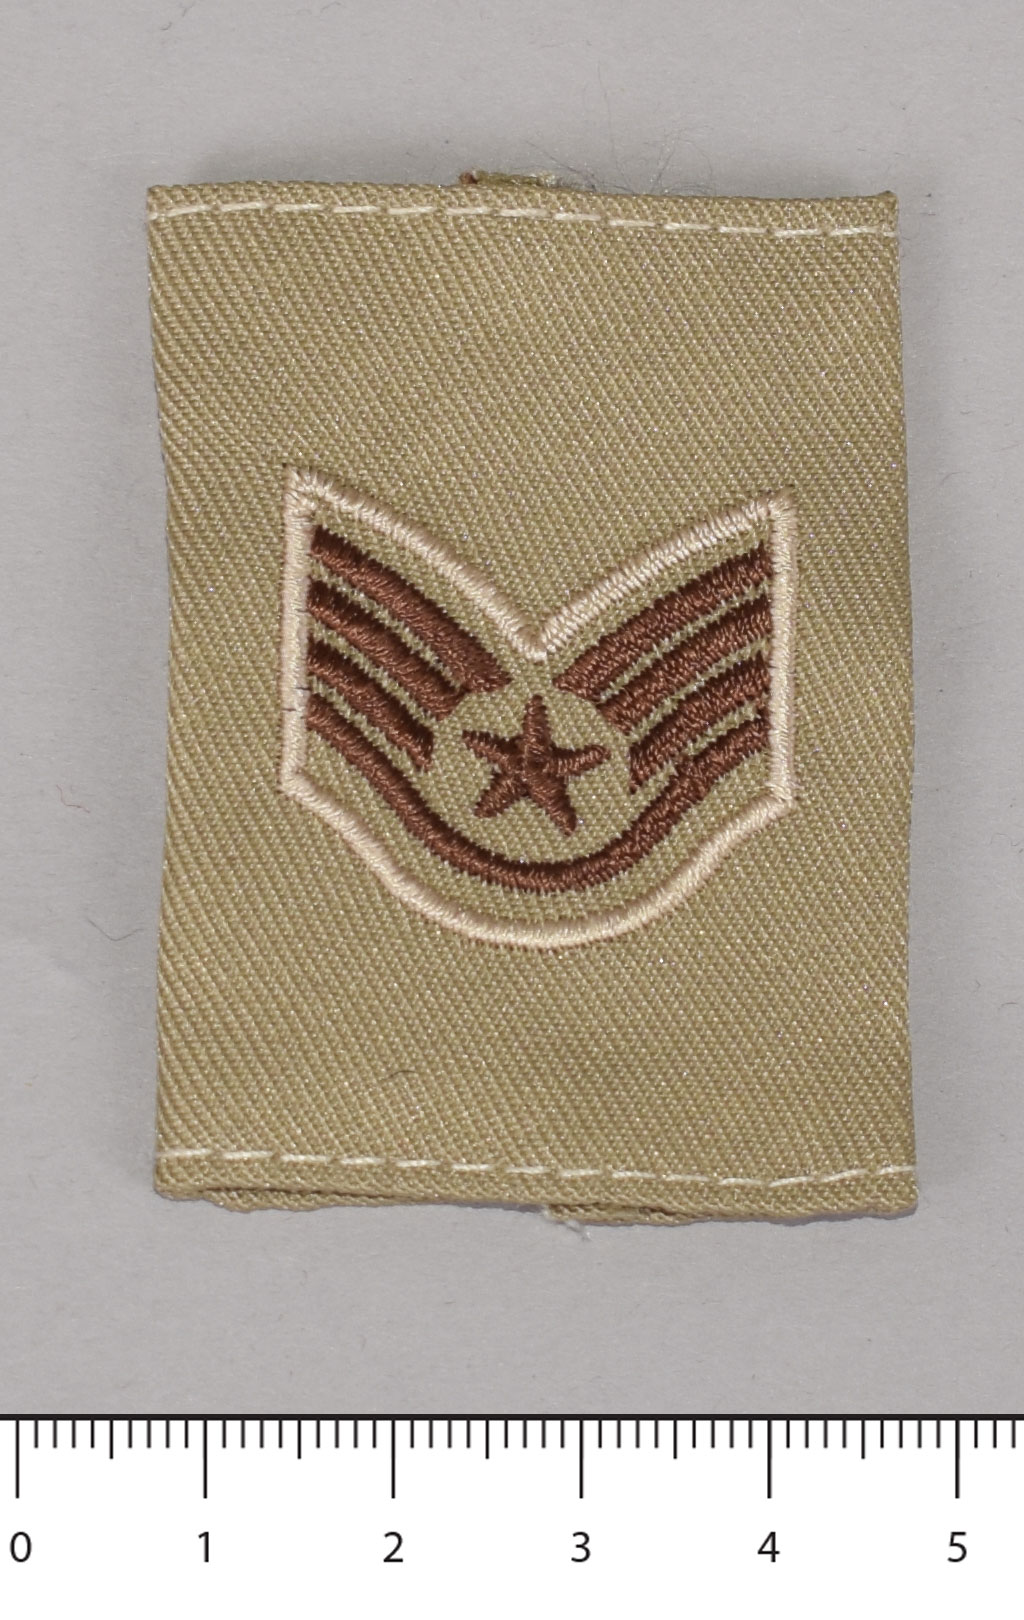 Нашивка-звание нагрудный погон USAF STUFF SERGIANT khaki #5016 США